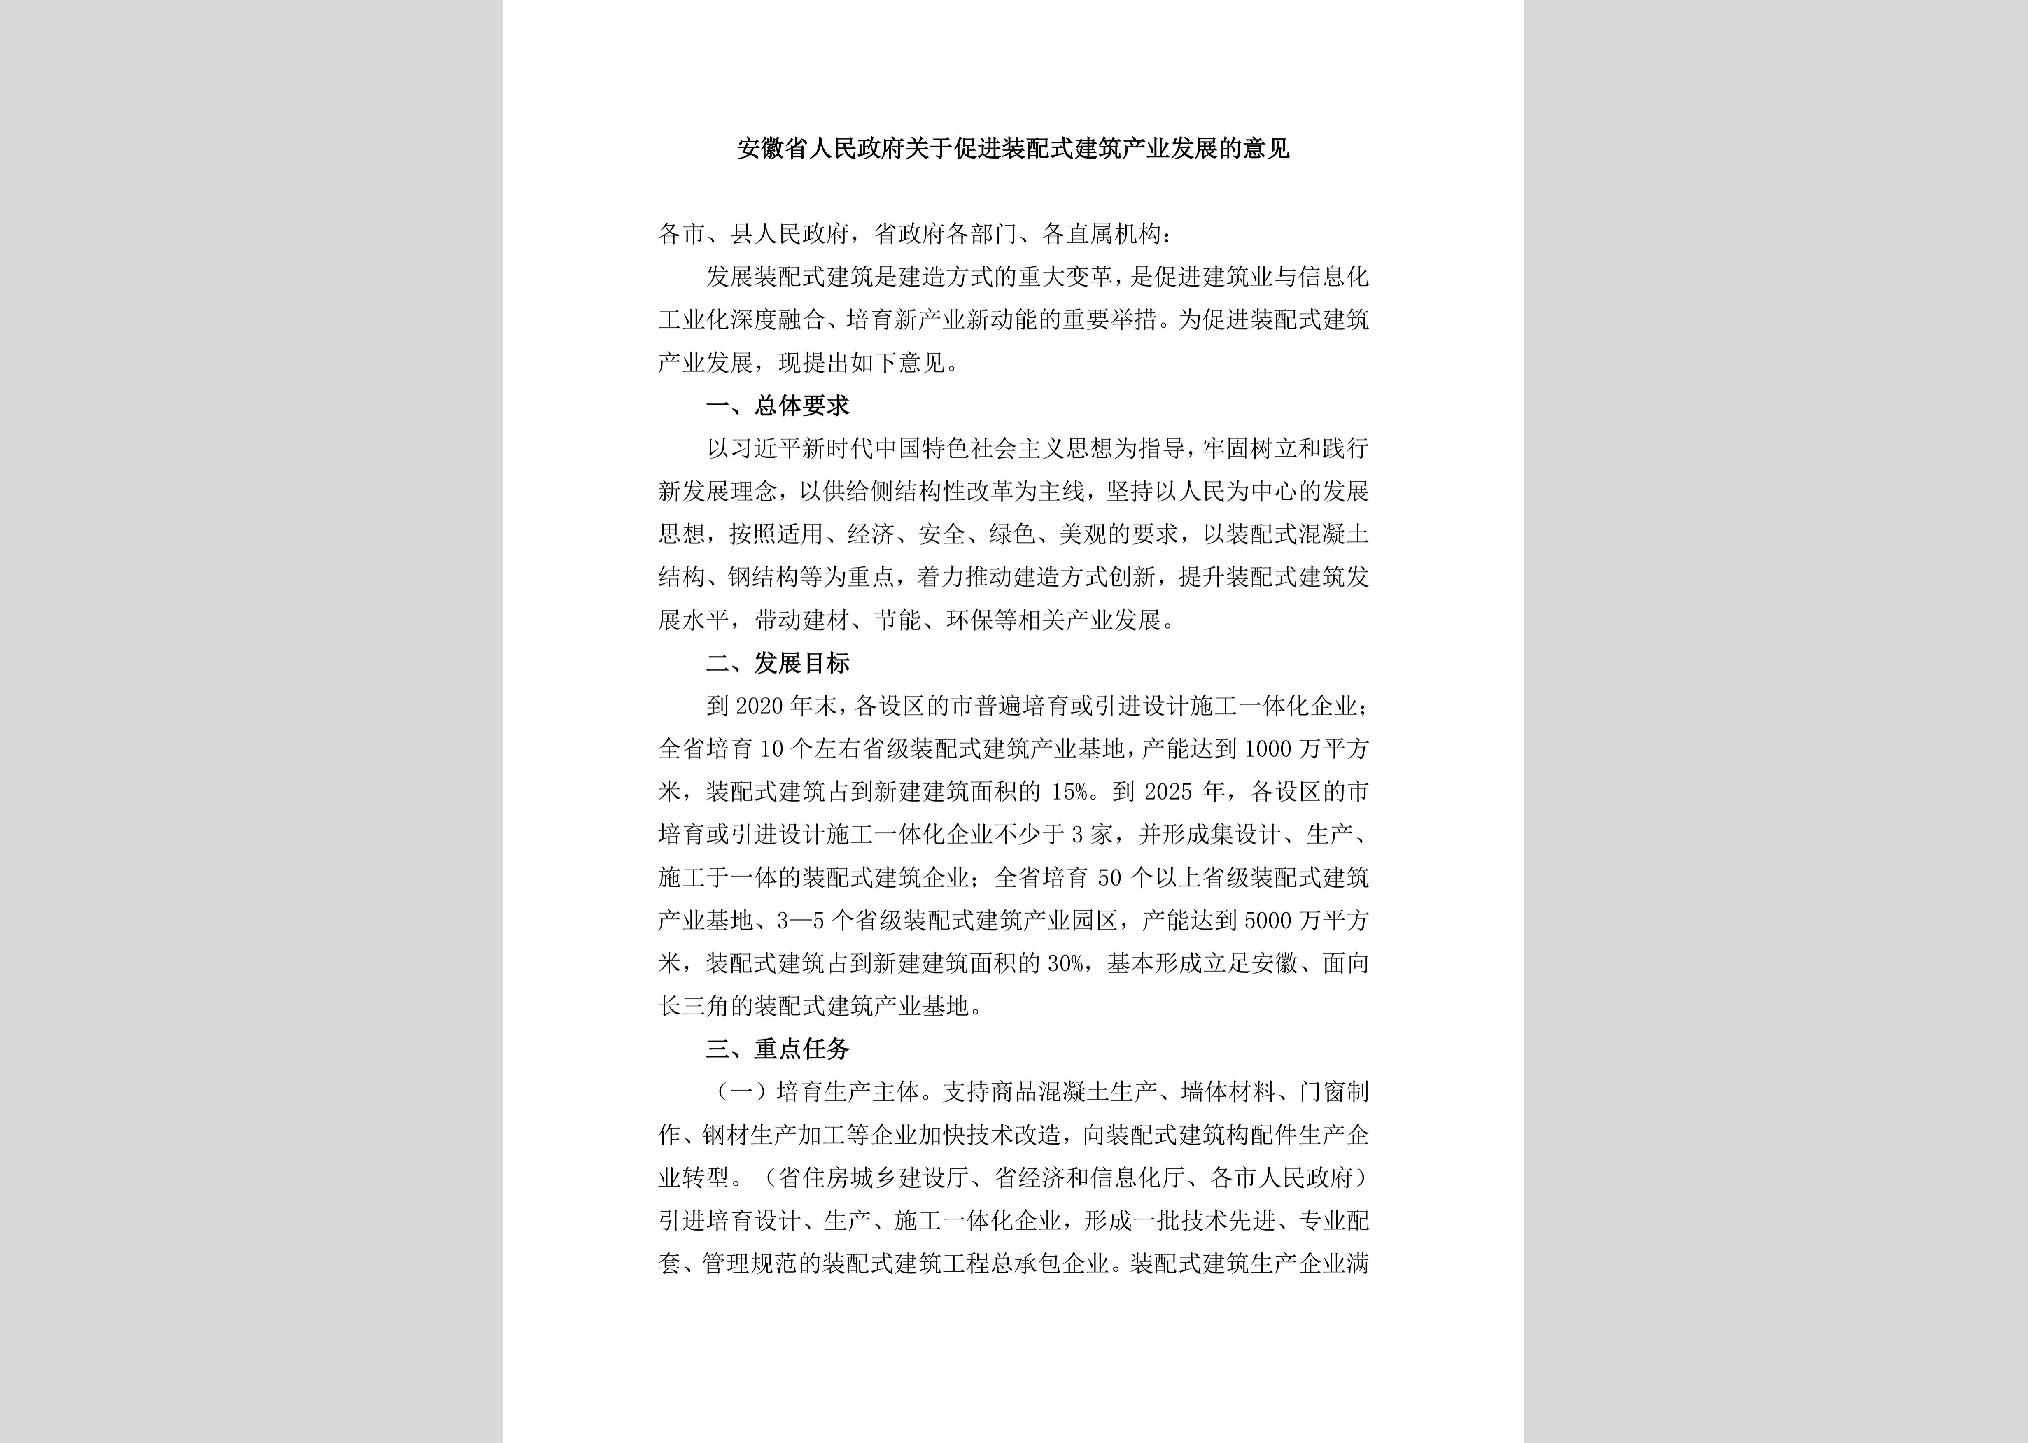 CJZPSJZC：安徽省人民政府关于促进装配式建筑产业发展的意见